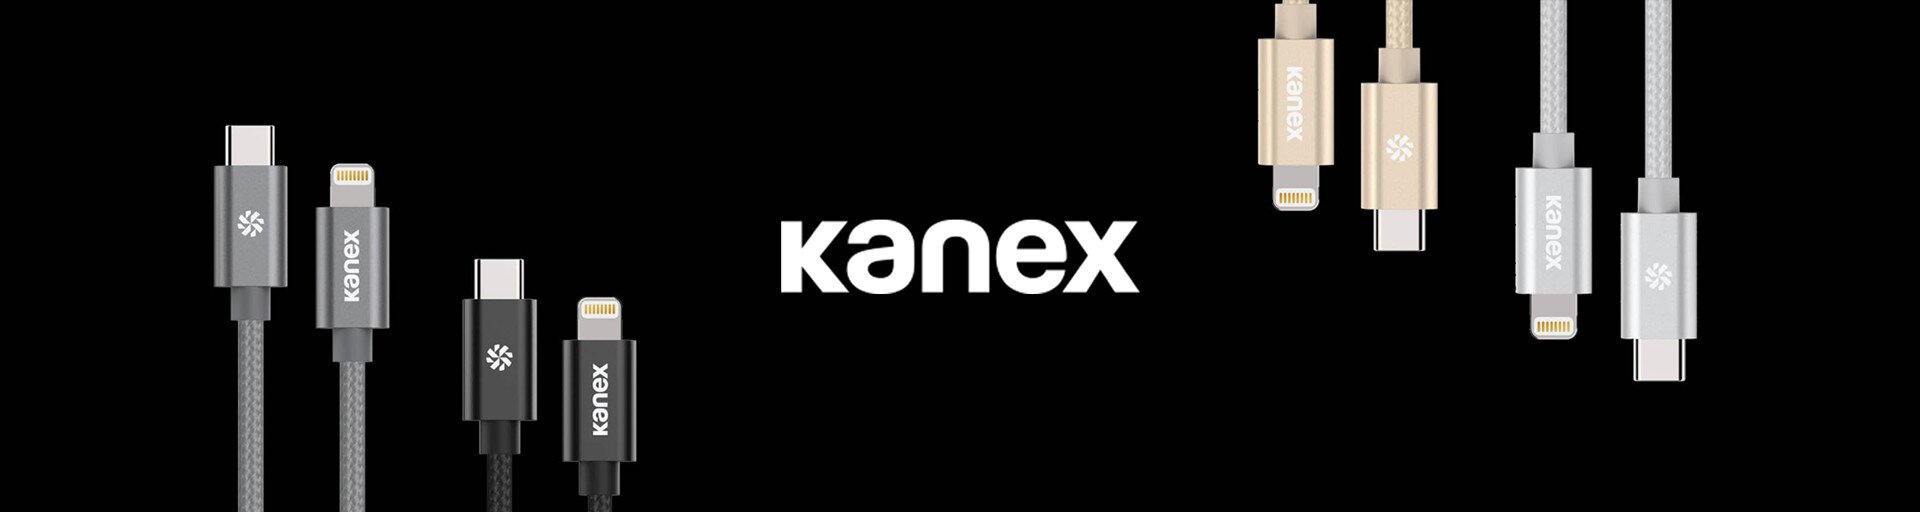 Kanex